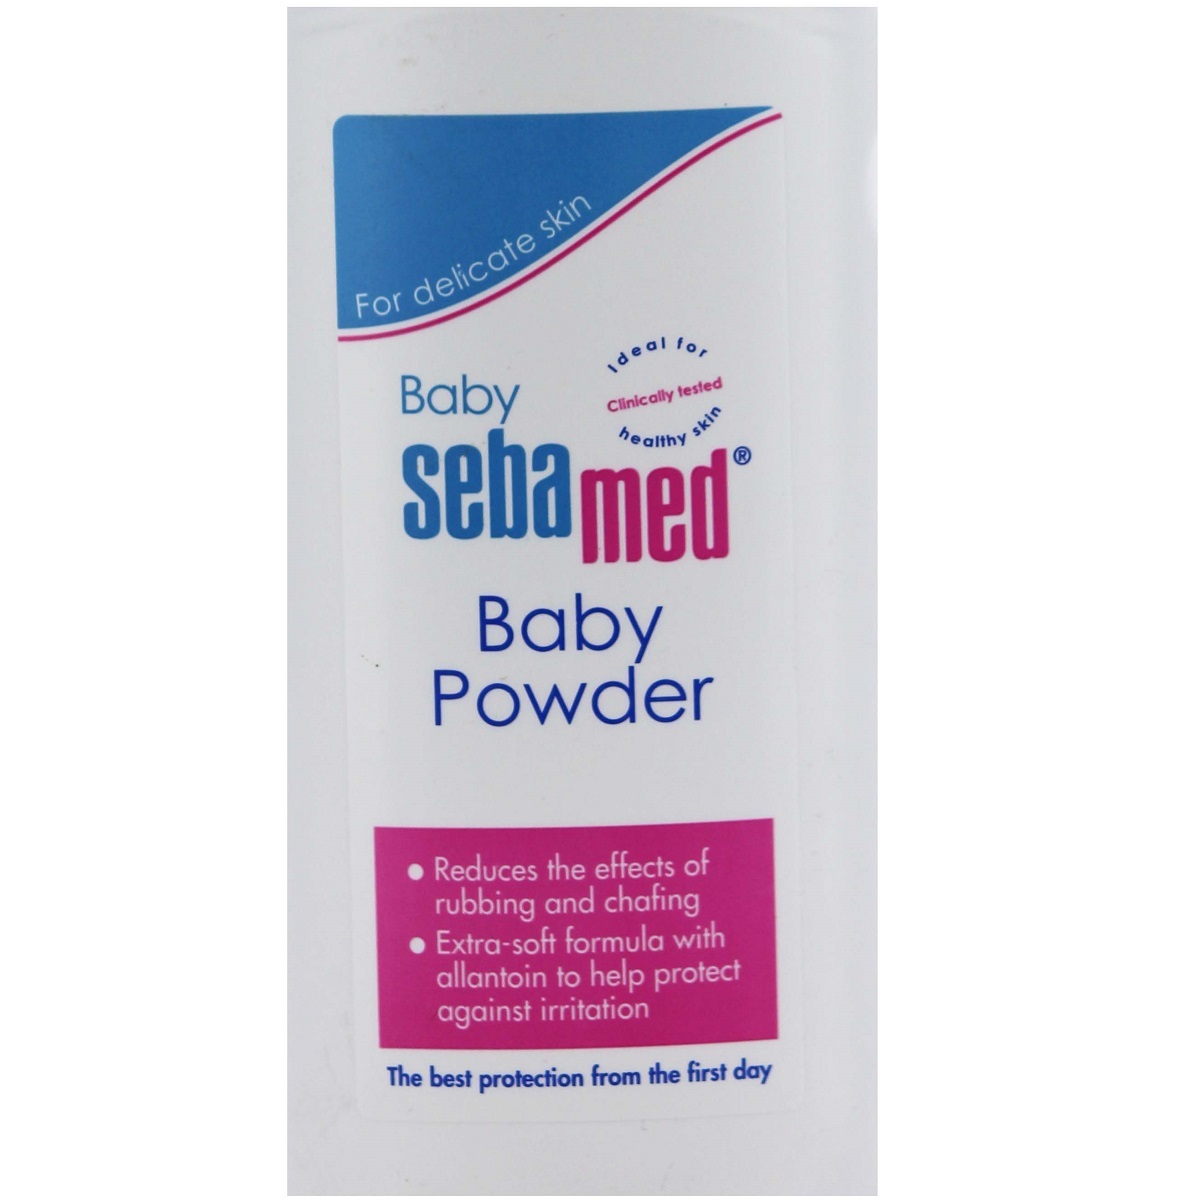 Sebamed Baby Powder 200g